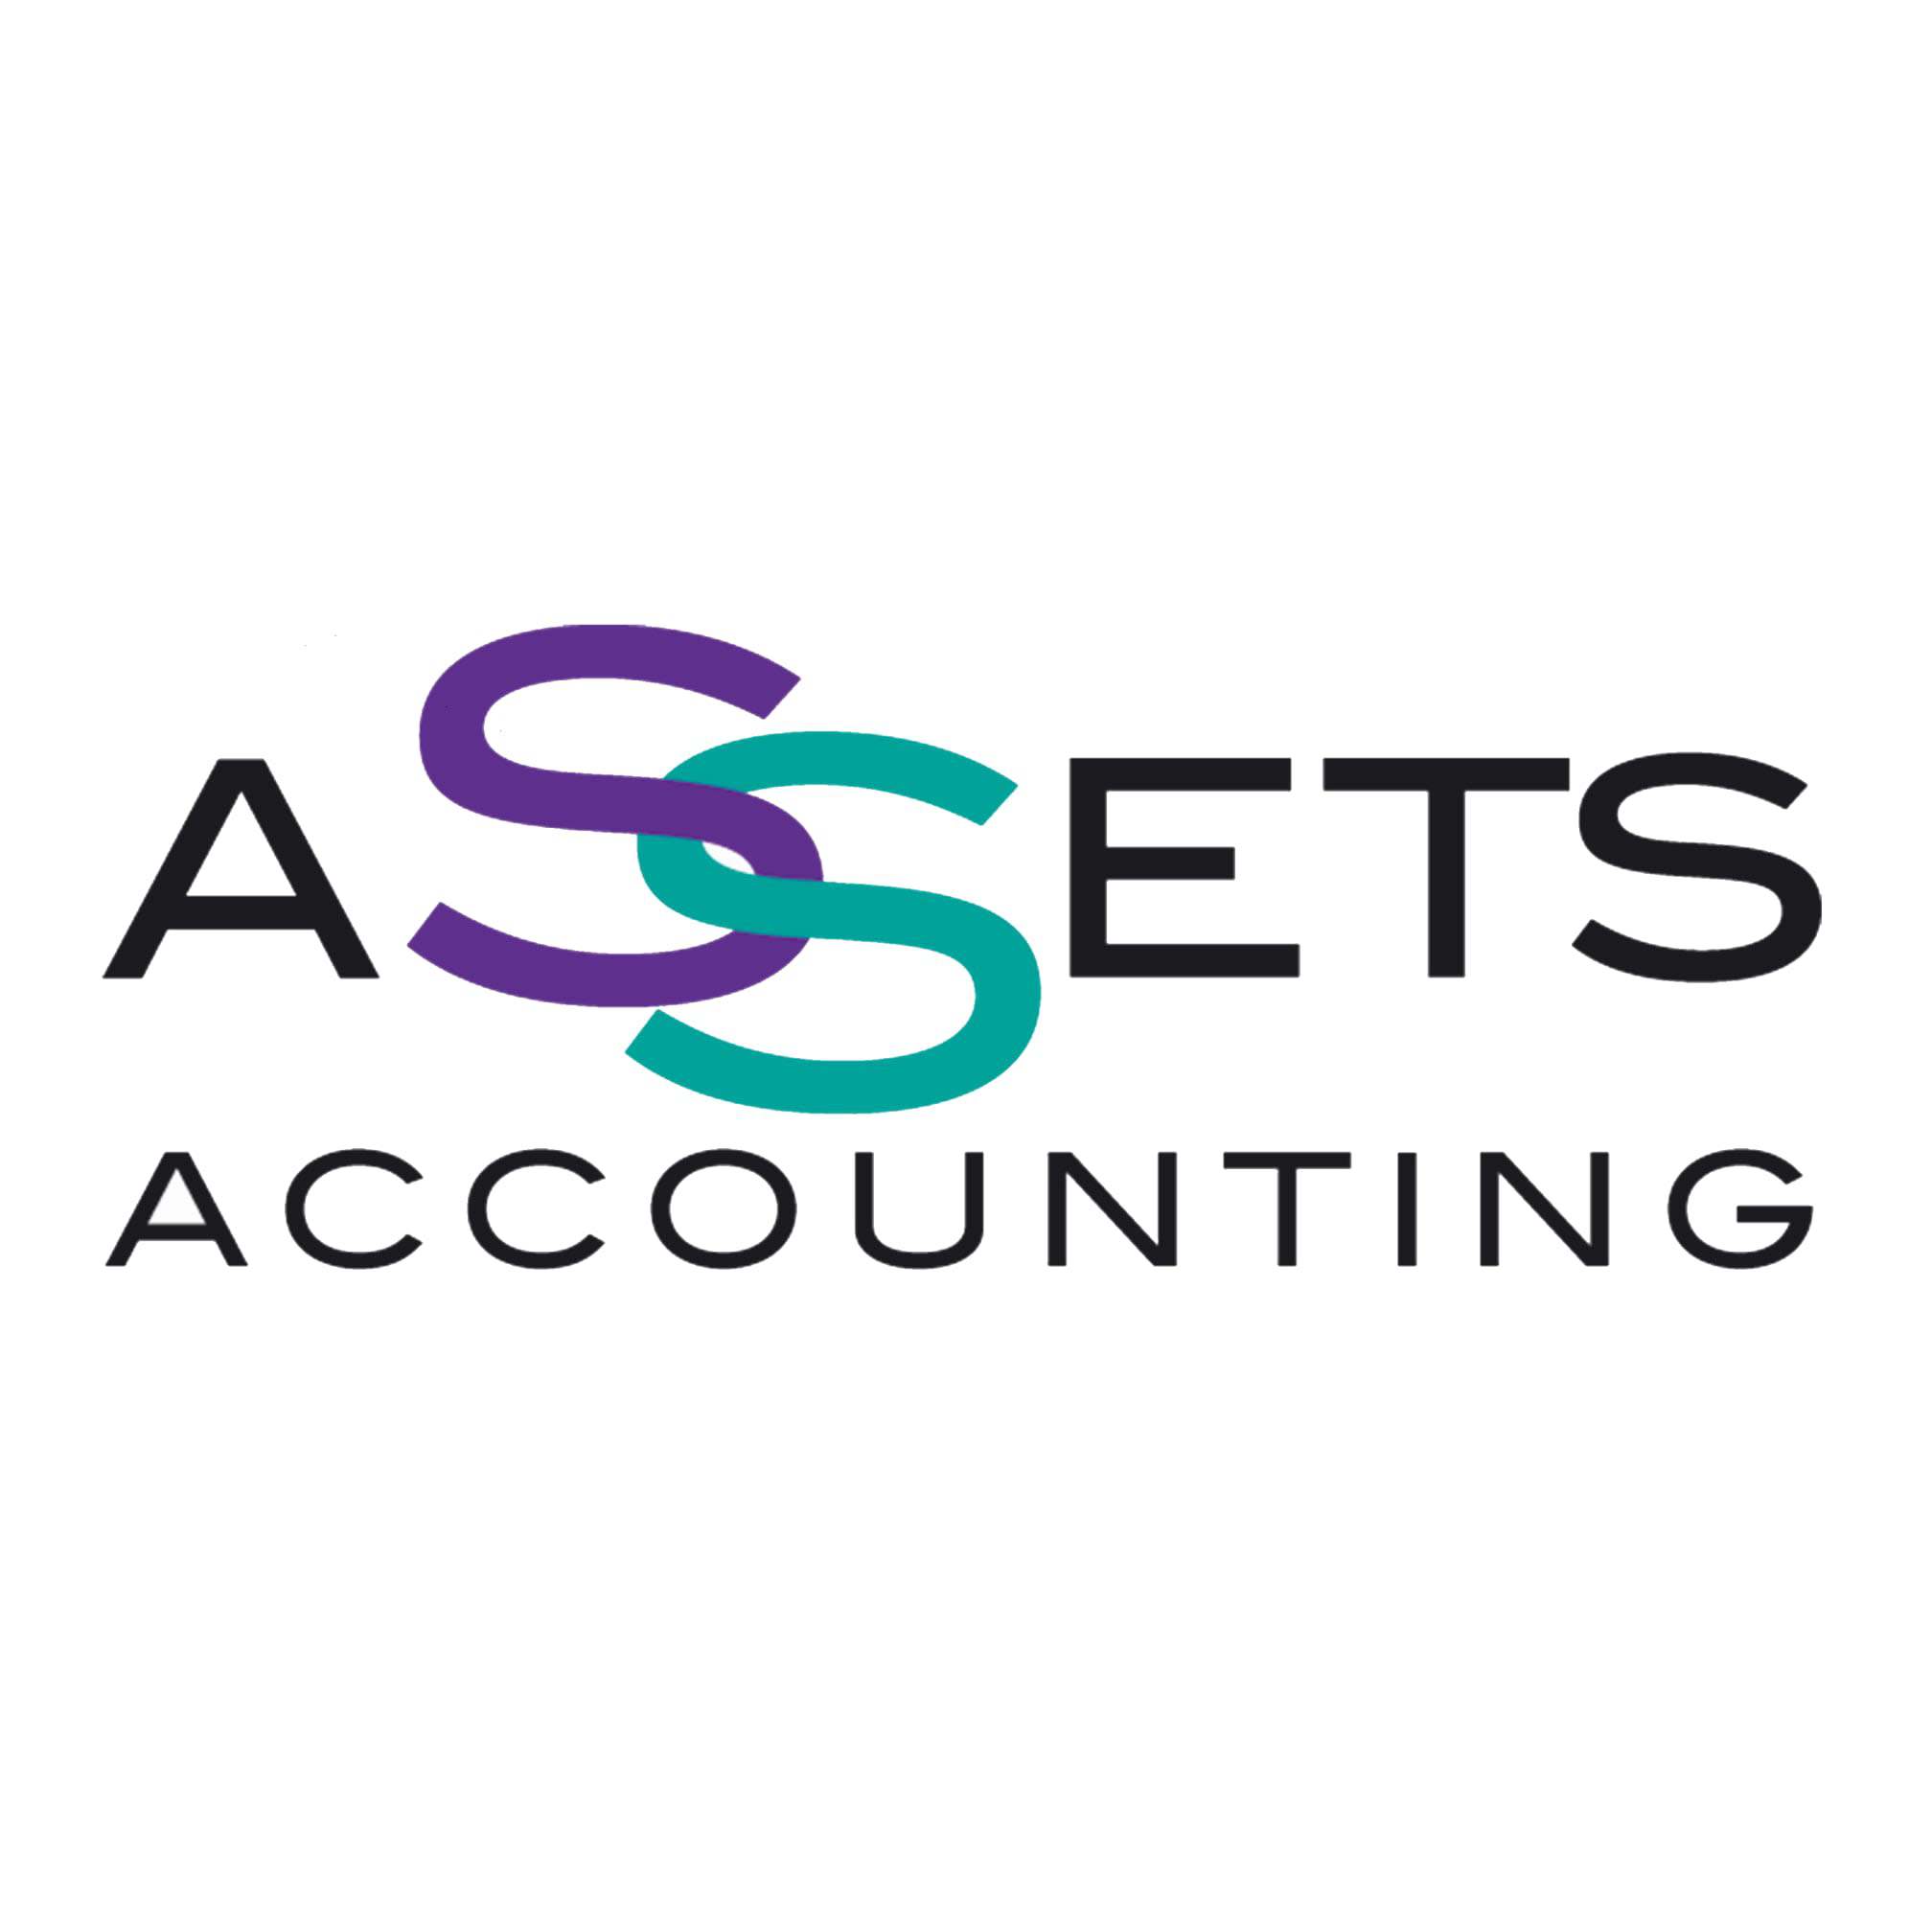 Assets Accounting Ltd logo